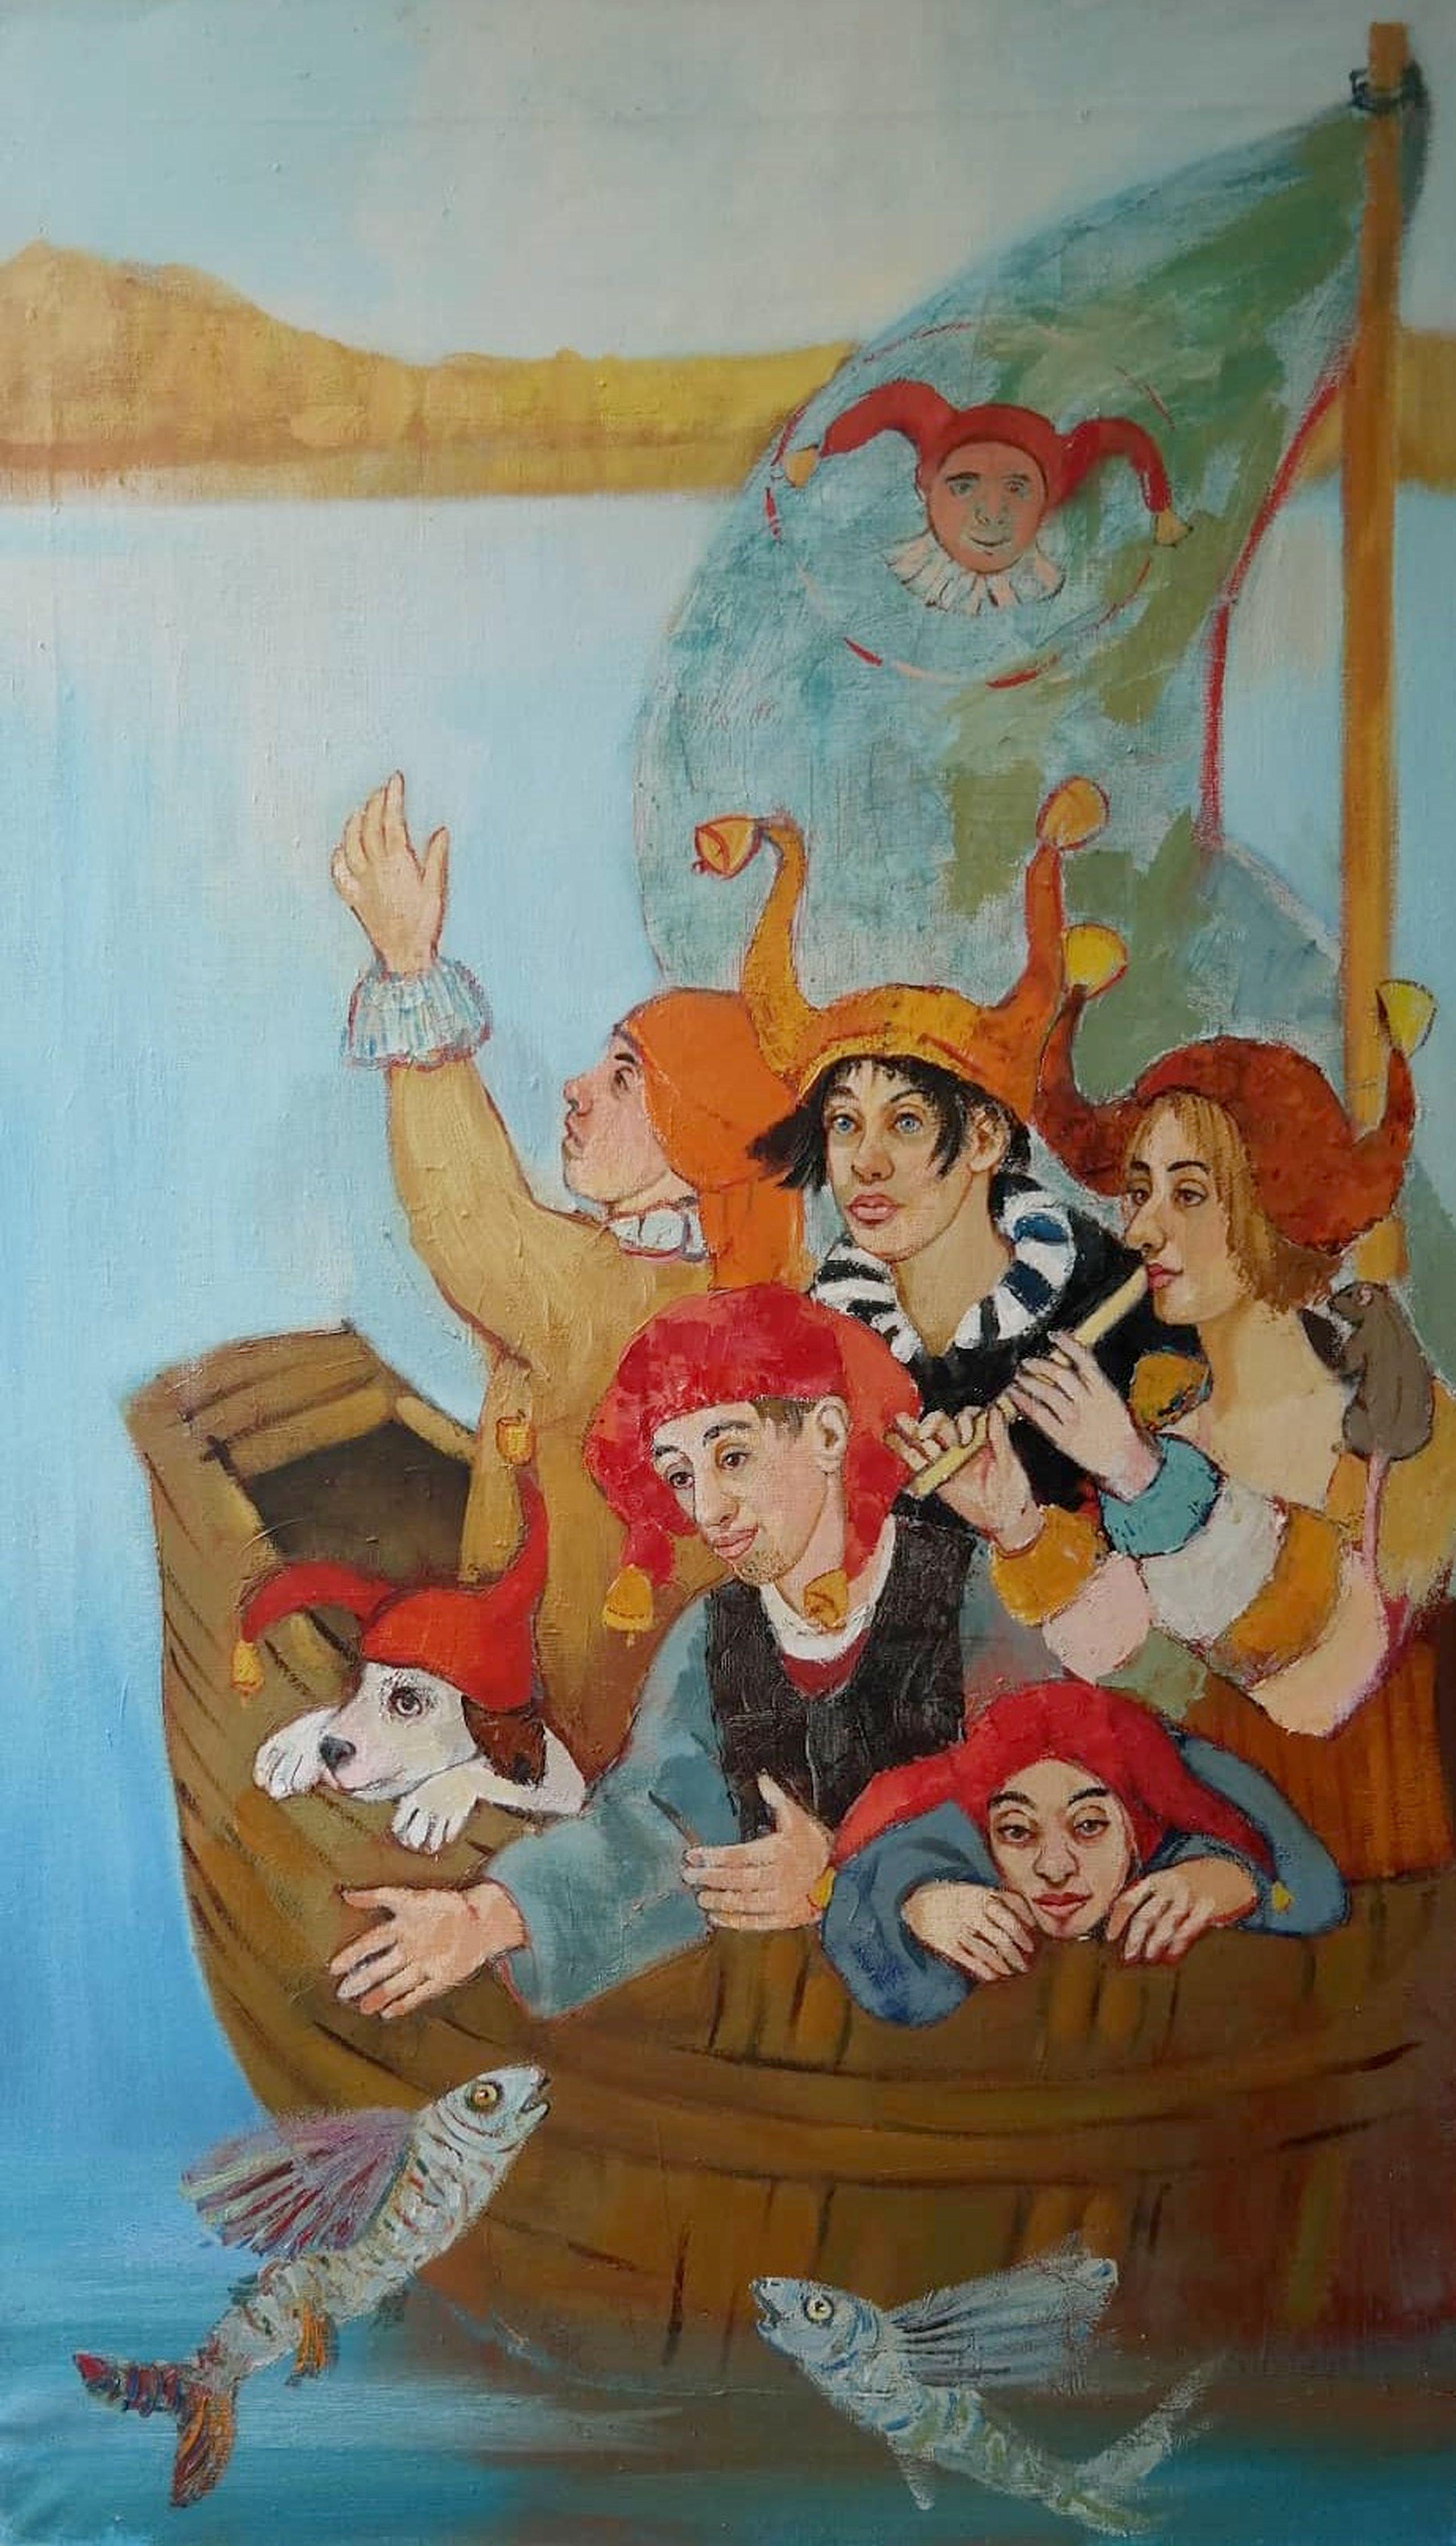 Dagnia Cherevichnika Figurative Painting - Ship of fools. 2010. Oil on canvas, 100x60 cm